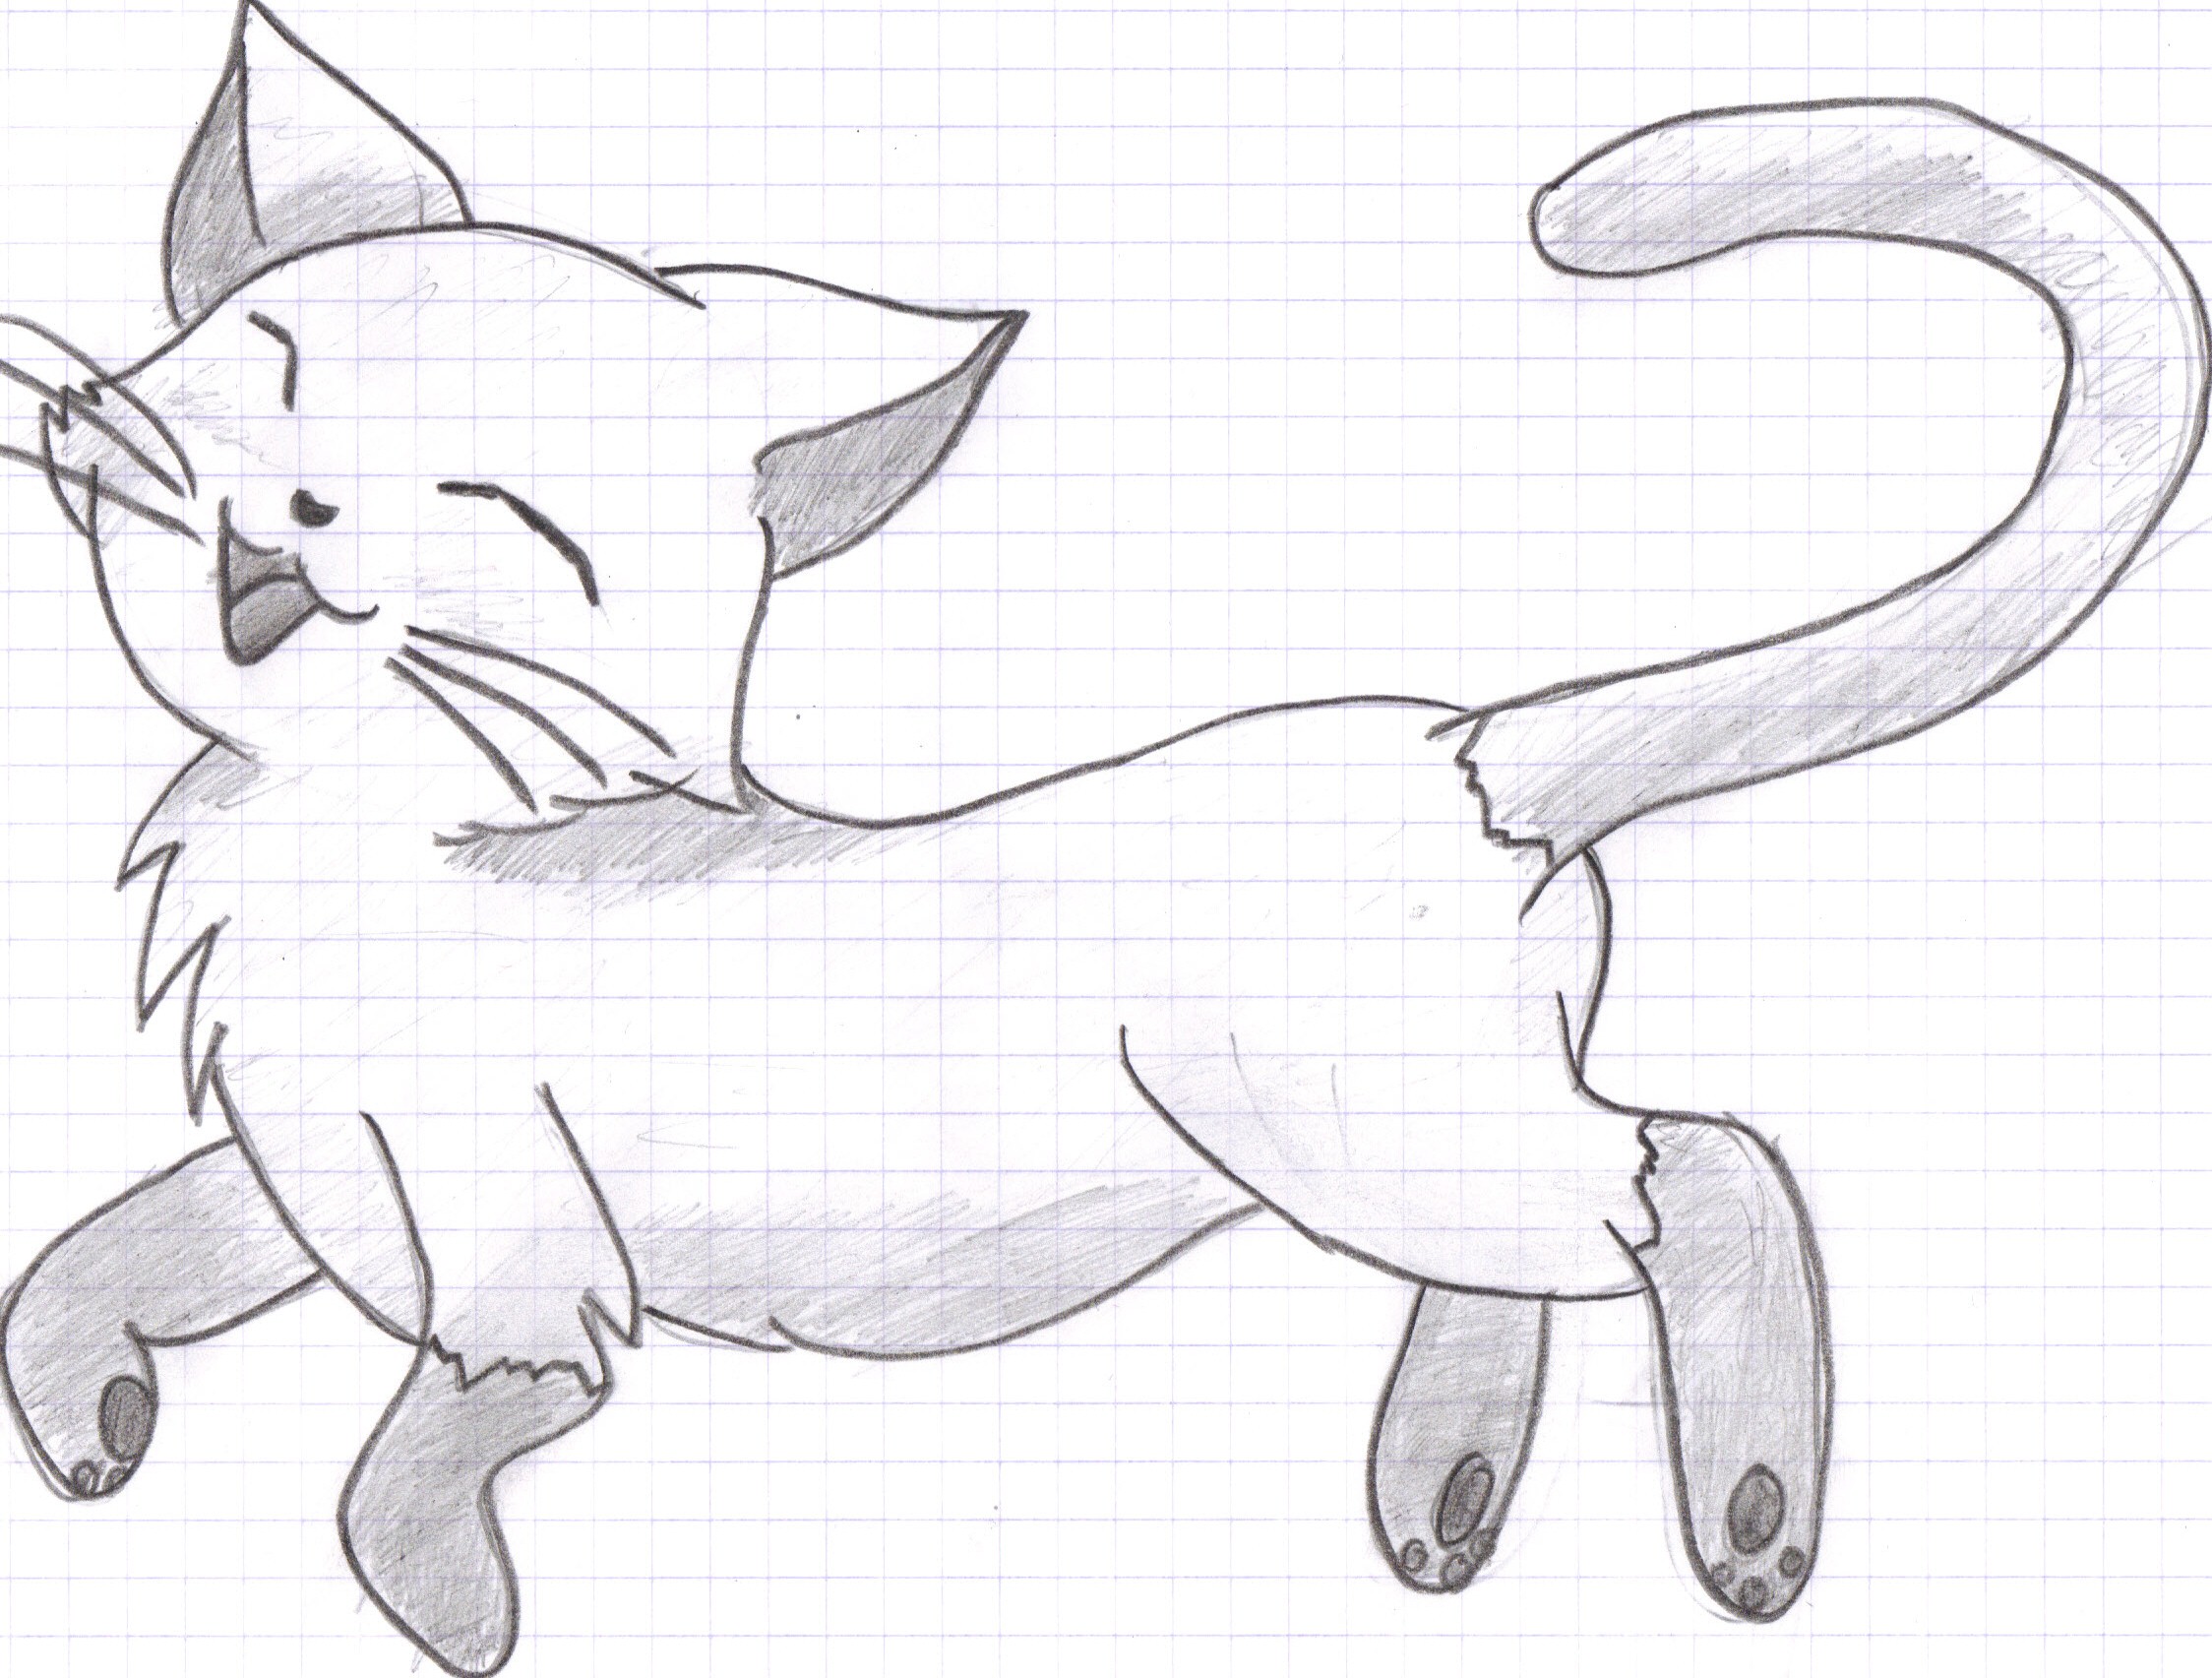 Cute Cat Images Drawing : Cute Cat Drawing Image | Bodheewasuep